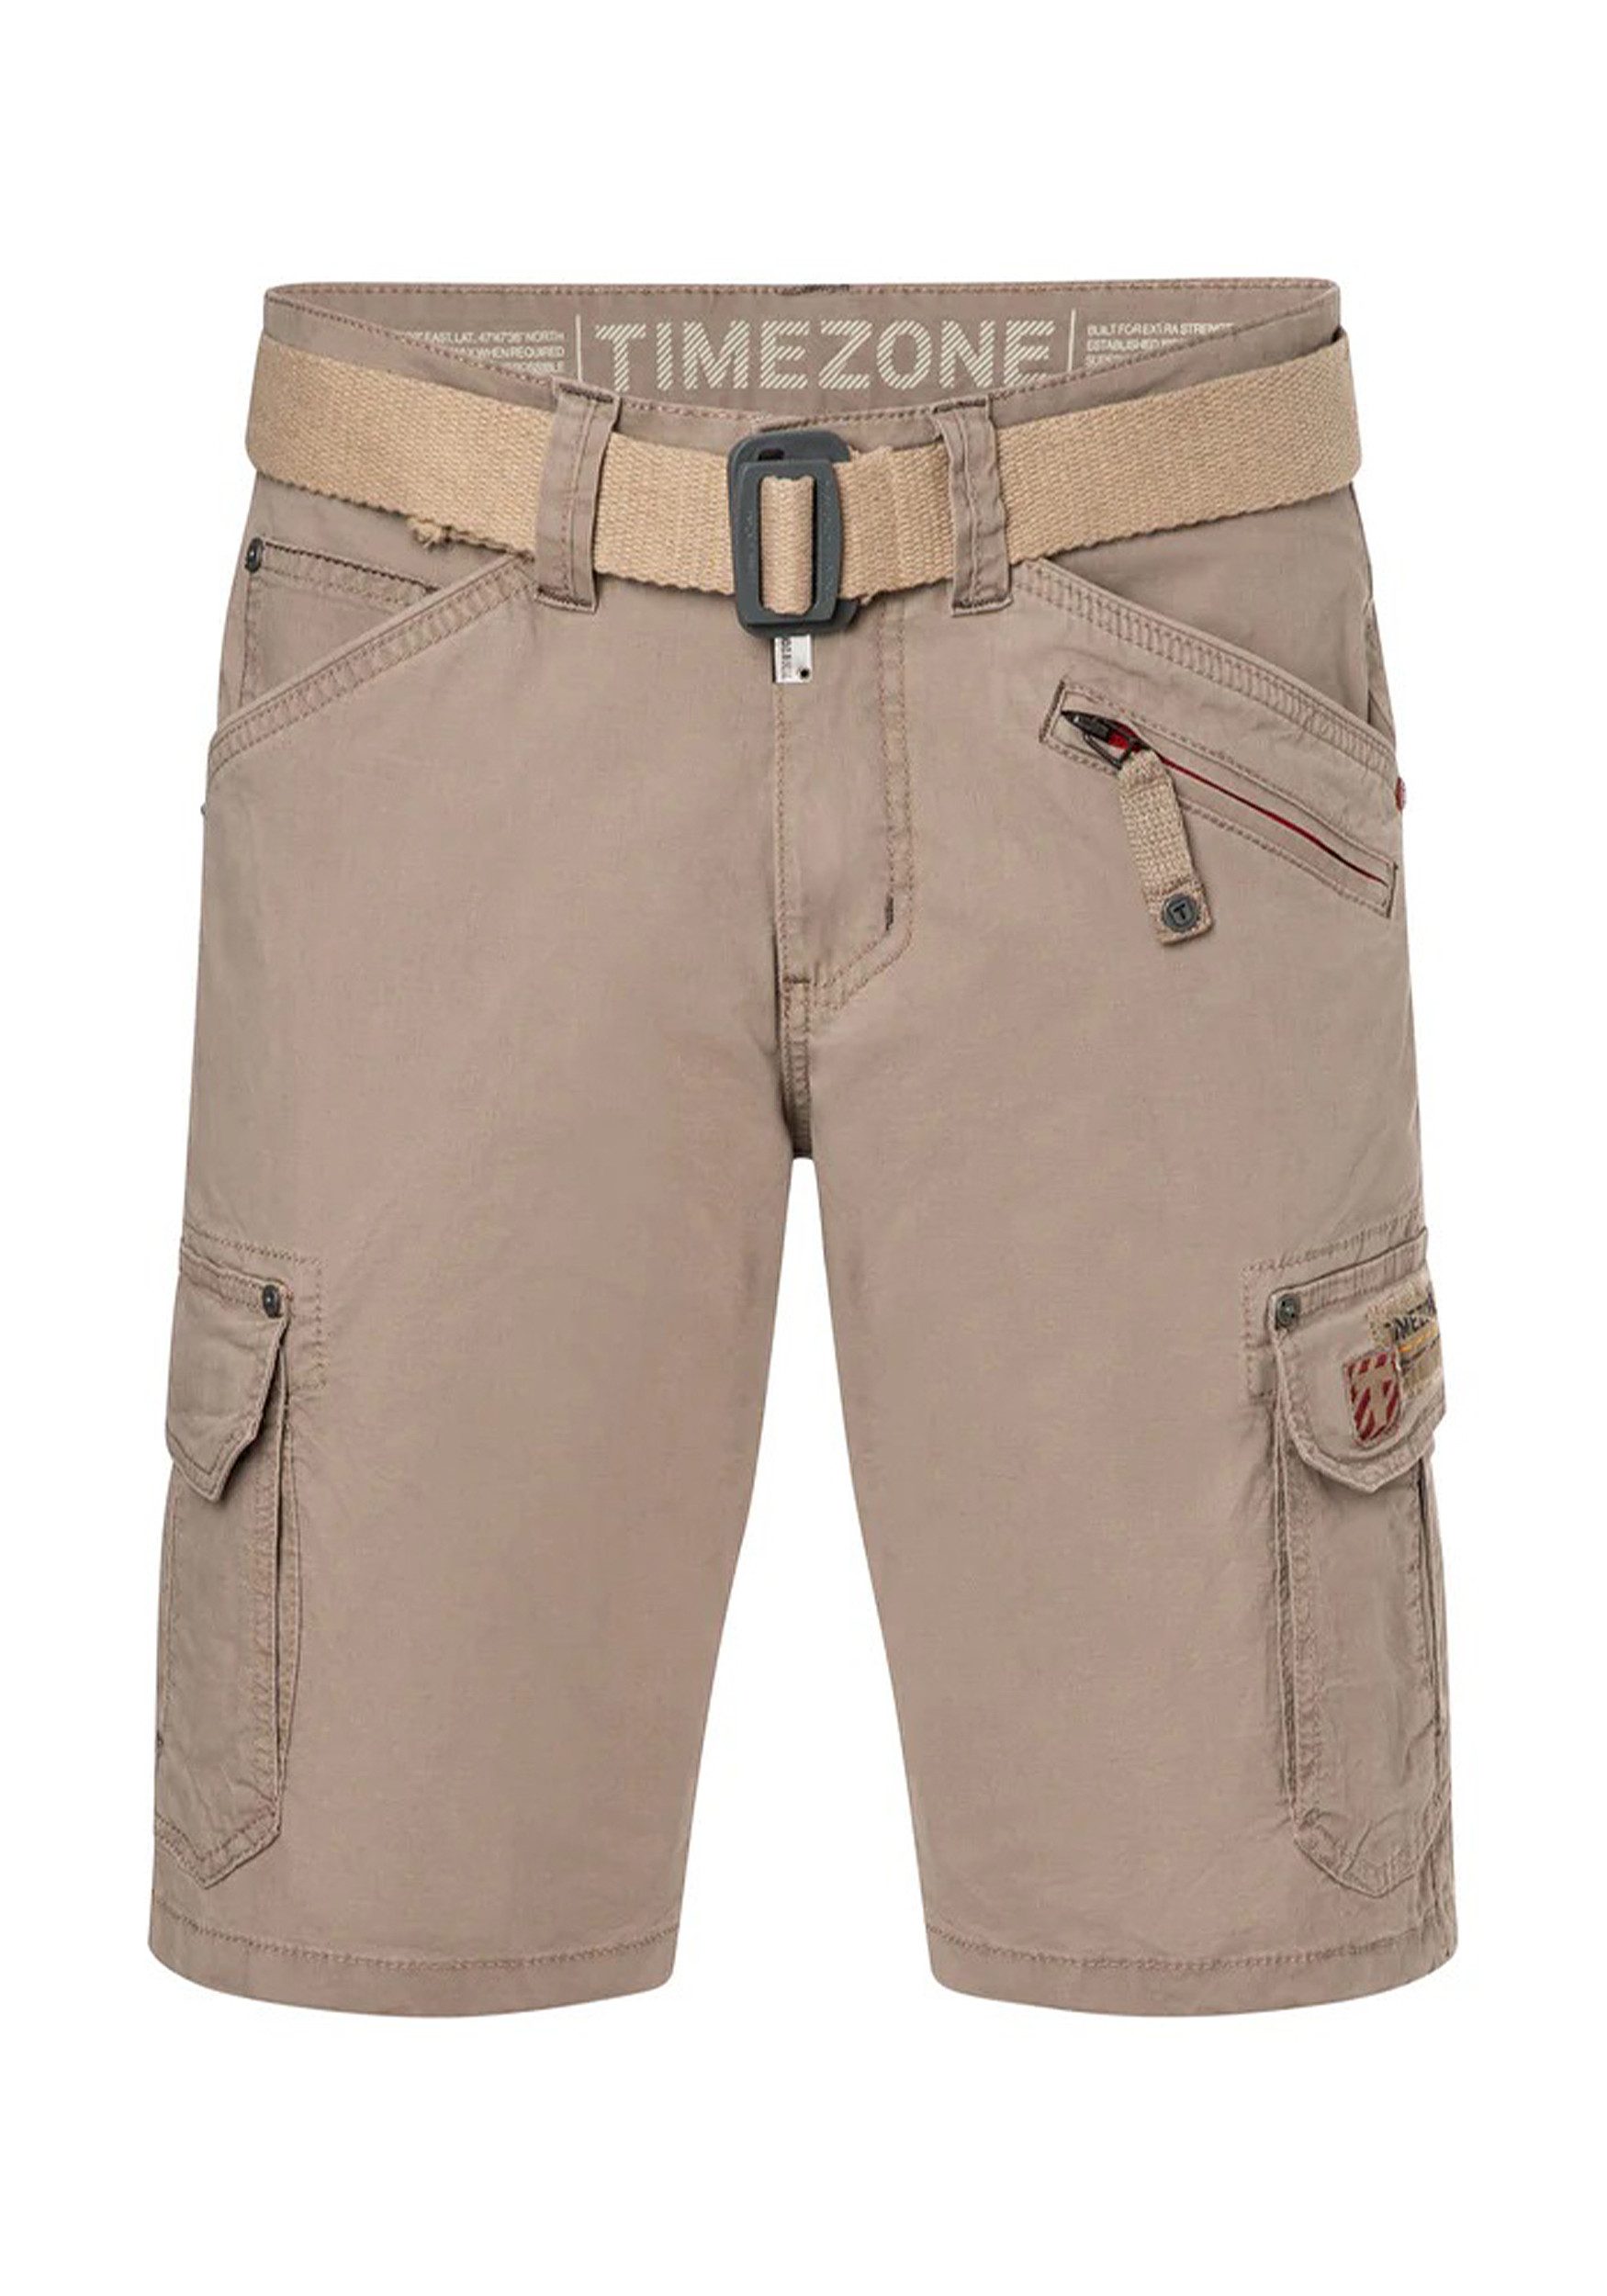 TIMEZONE Cargoshorts Shorts Kurze Cargo Hose Regular Mid Waist Pants 7311 in Braun